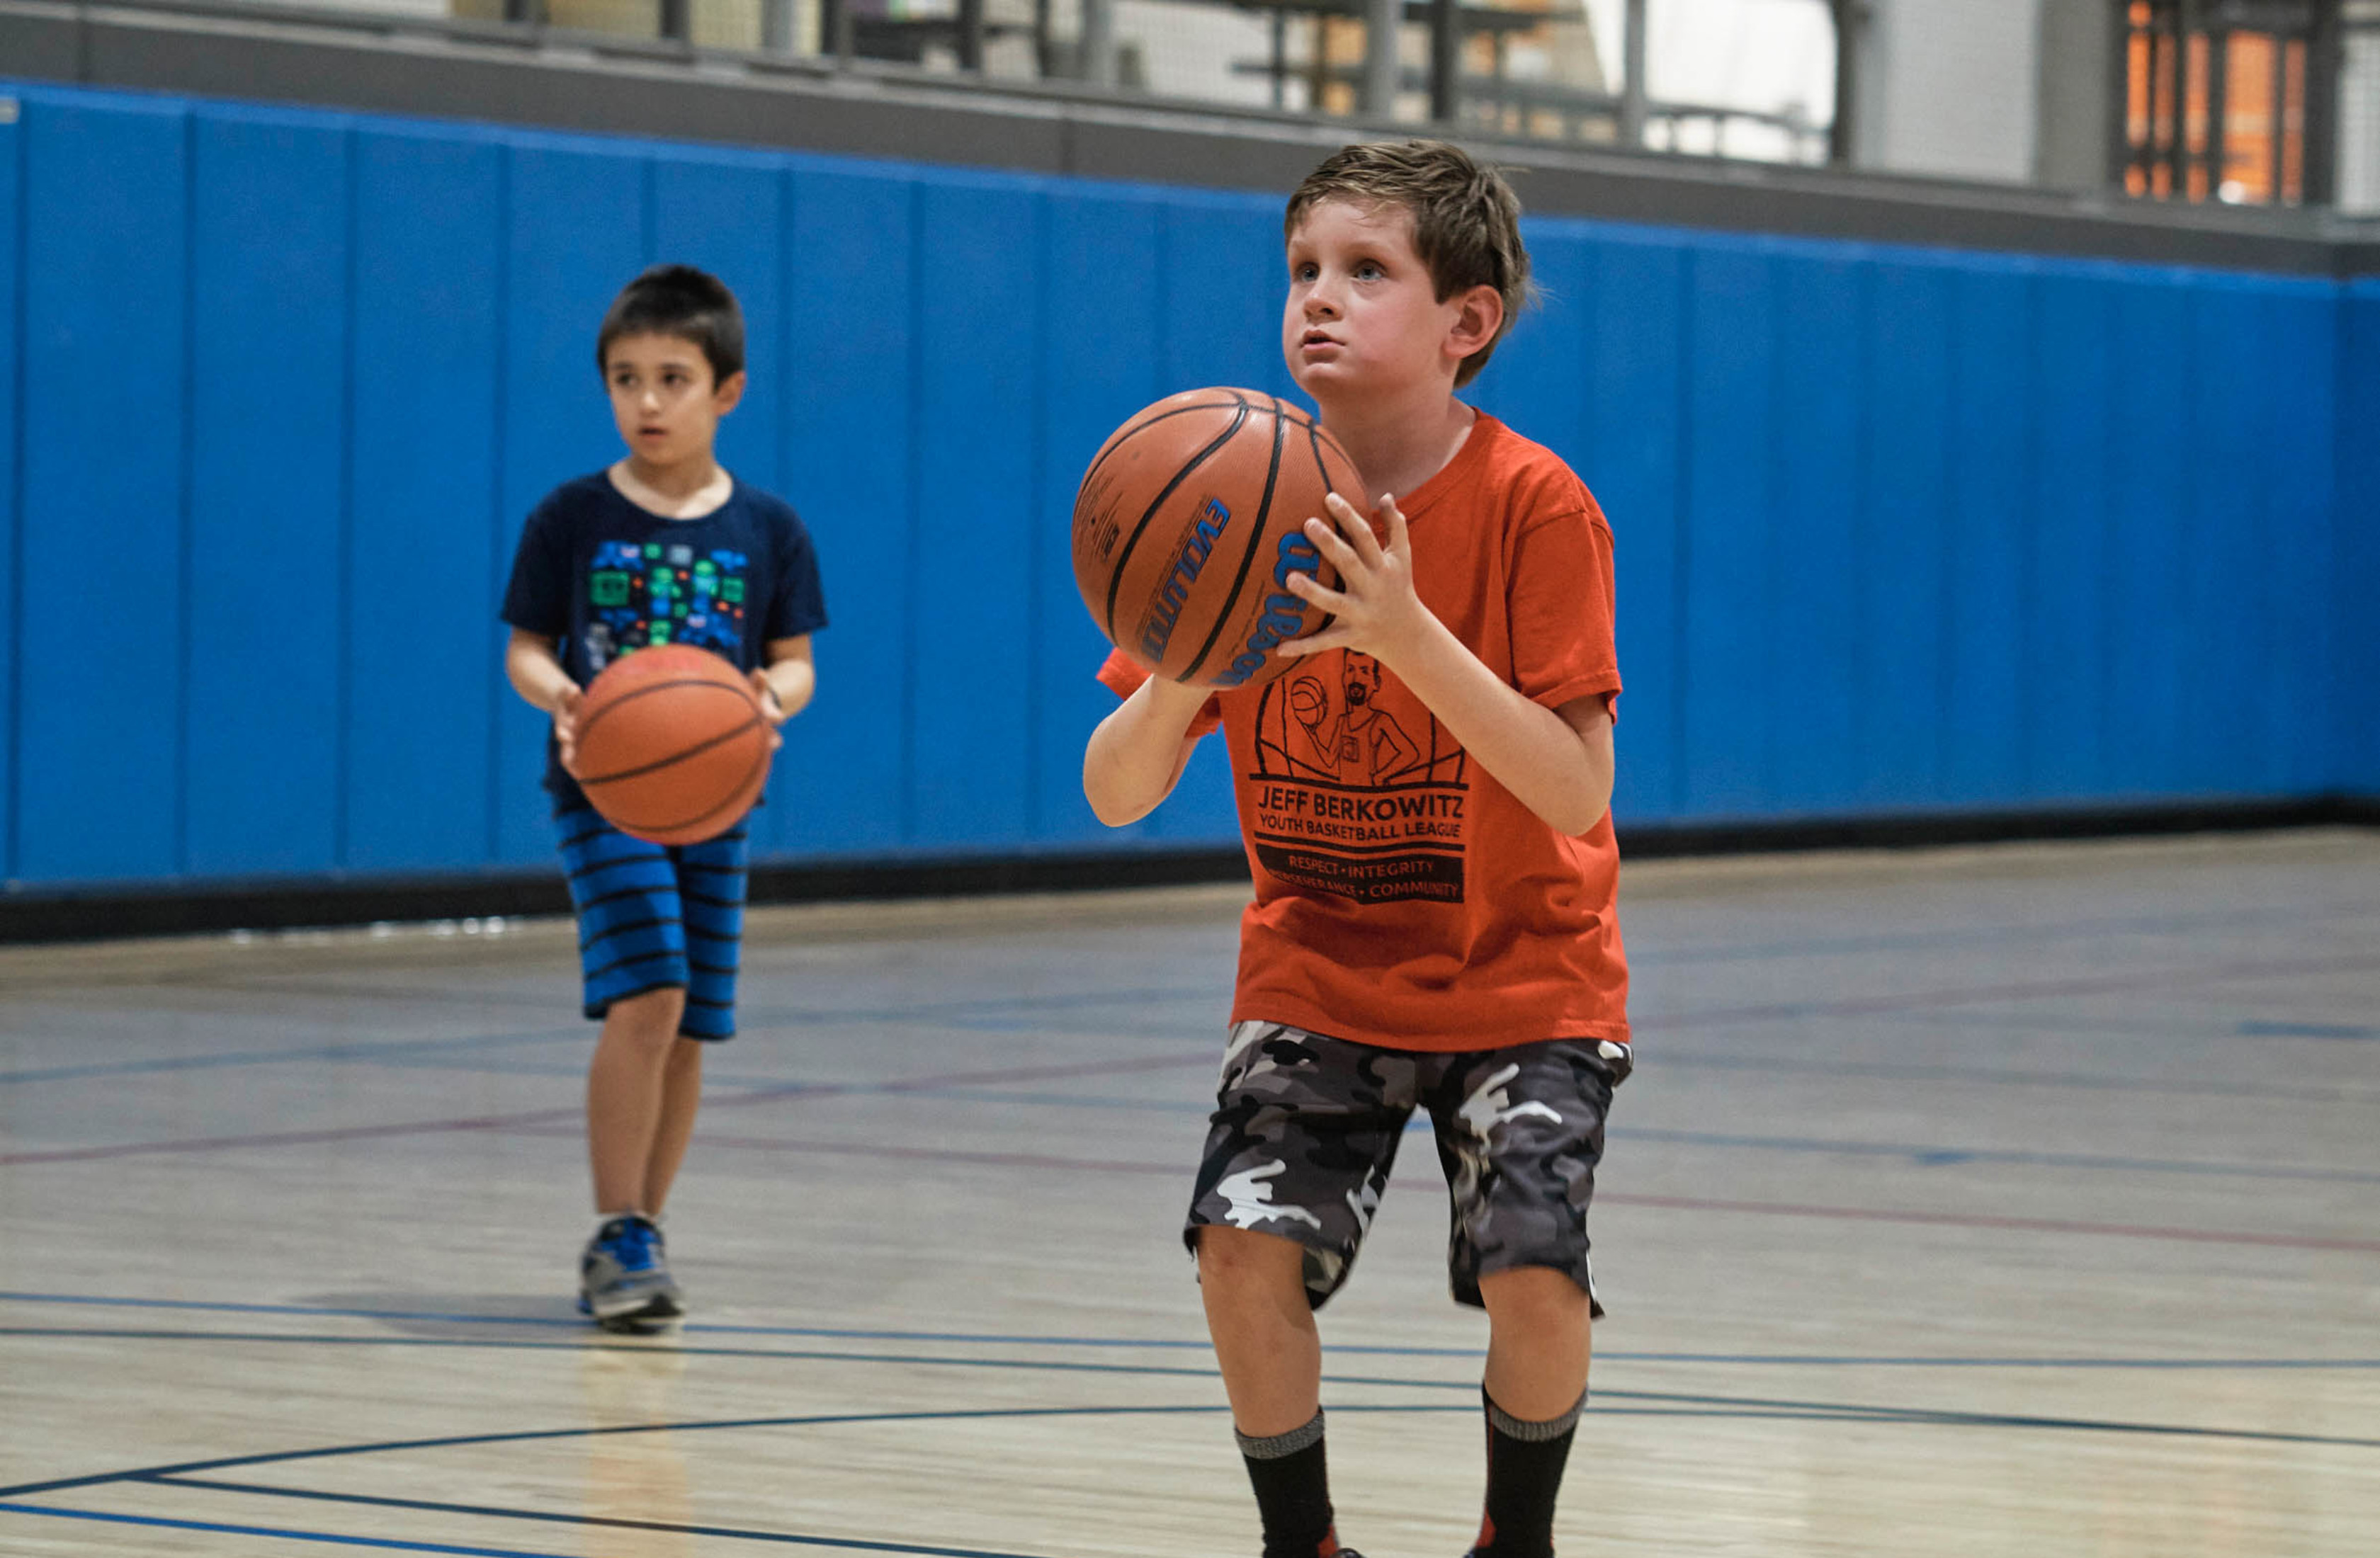 Two kids playing basketball.